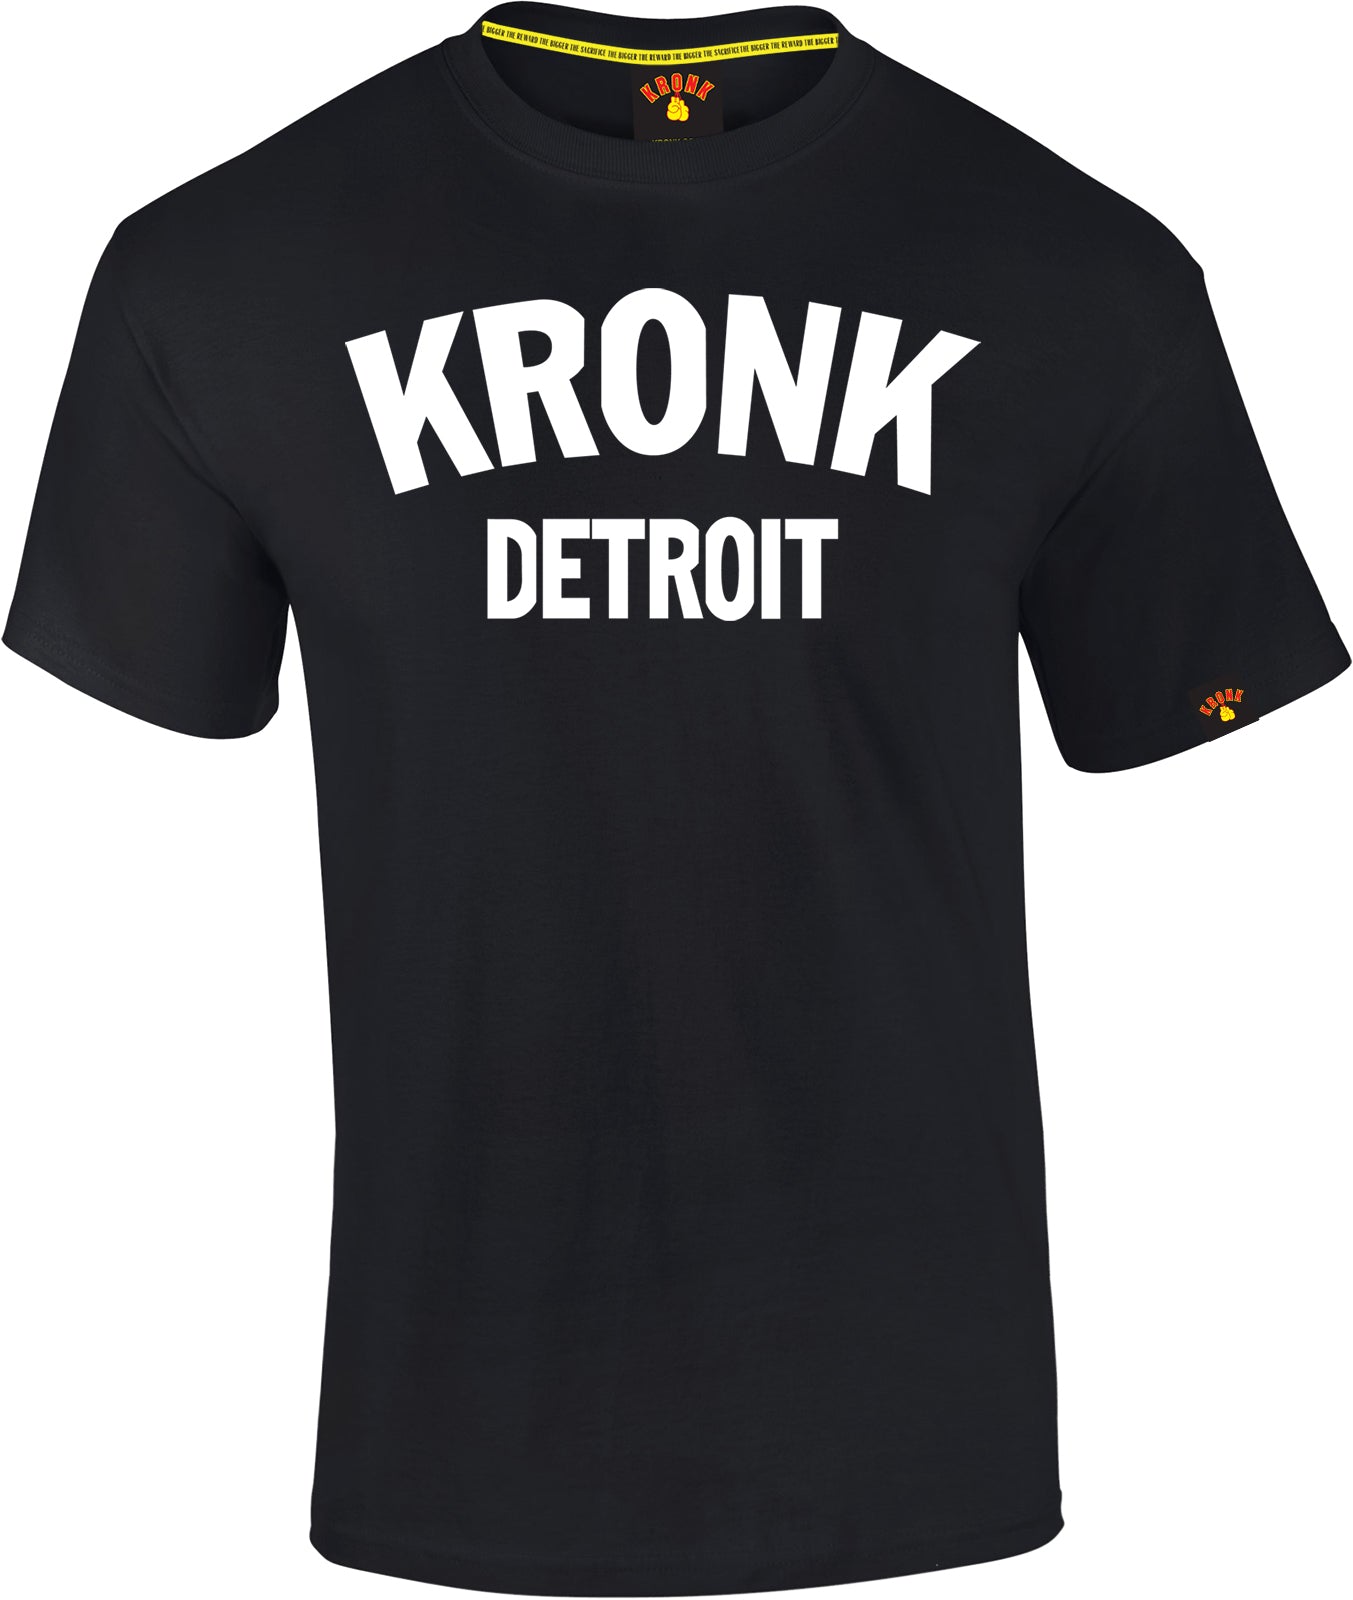 KRONK Detroit Regular Fit T Shirt Black with white logo